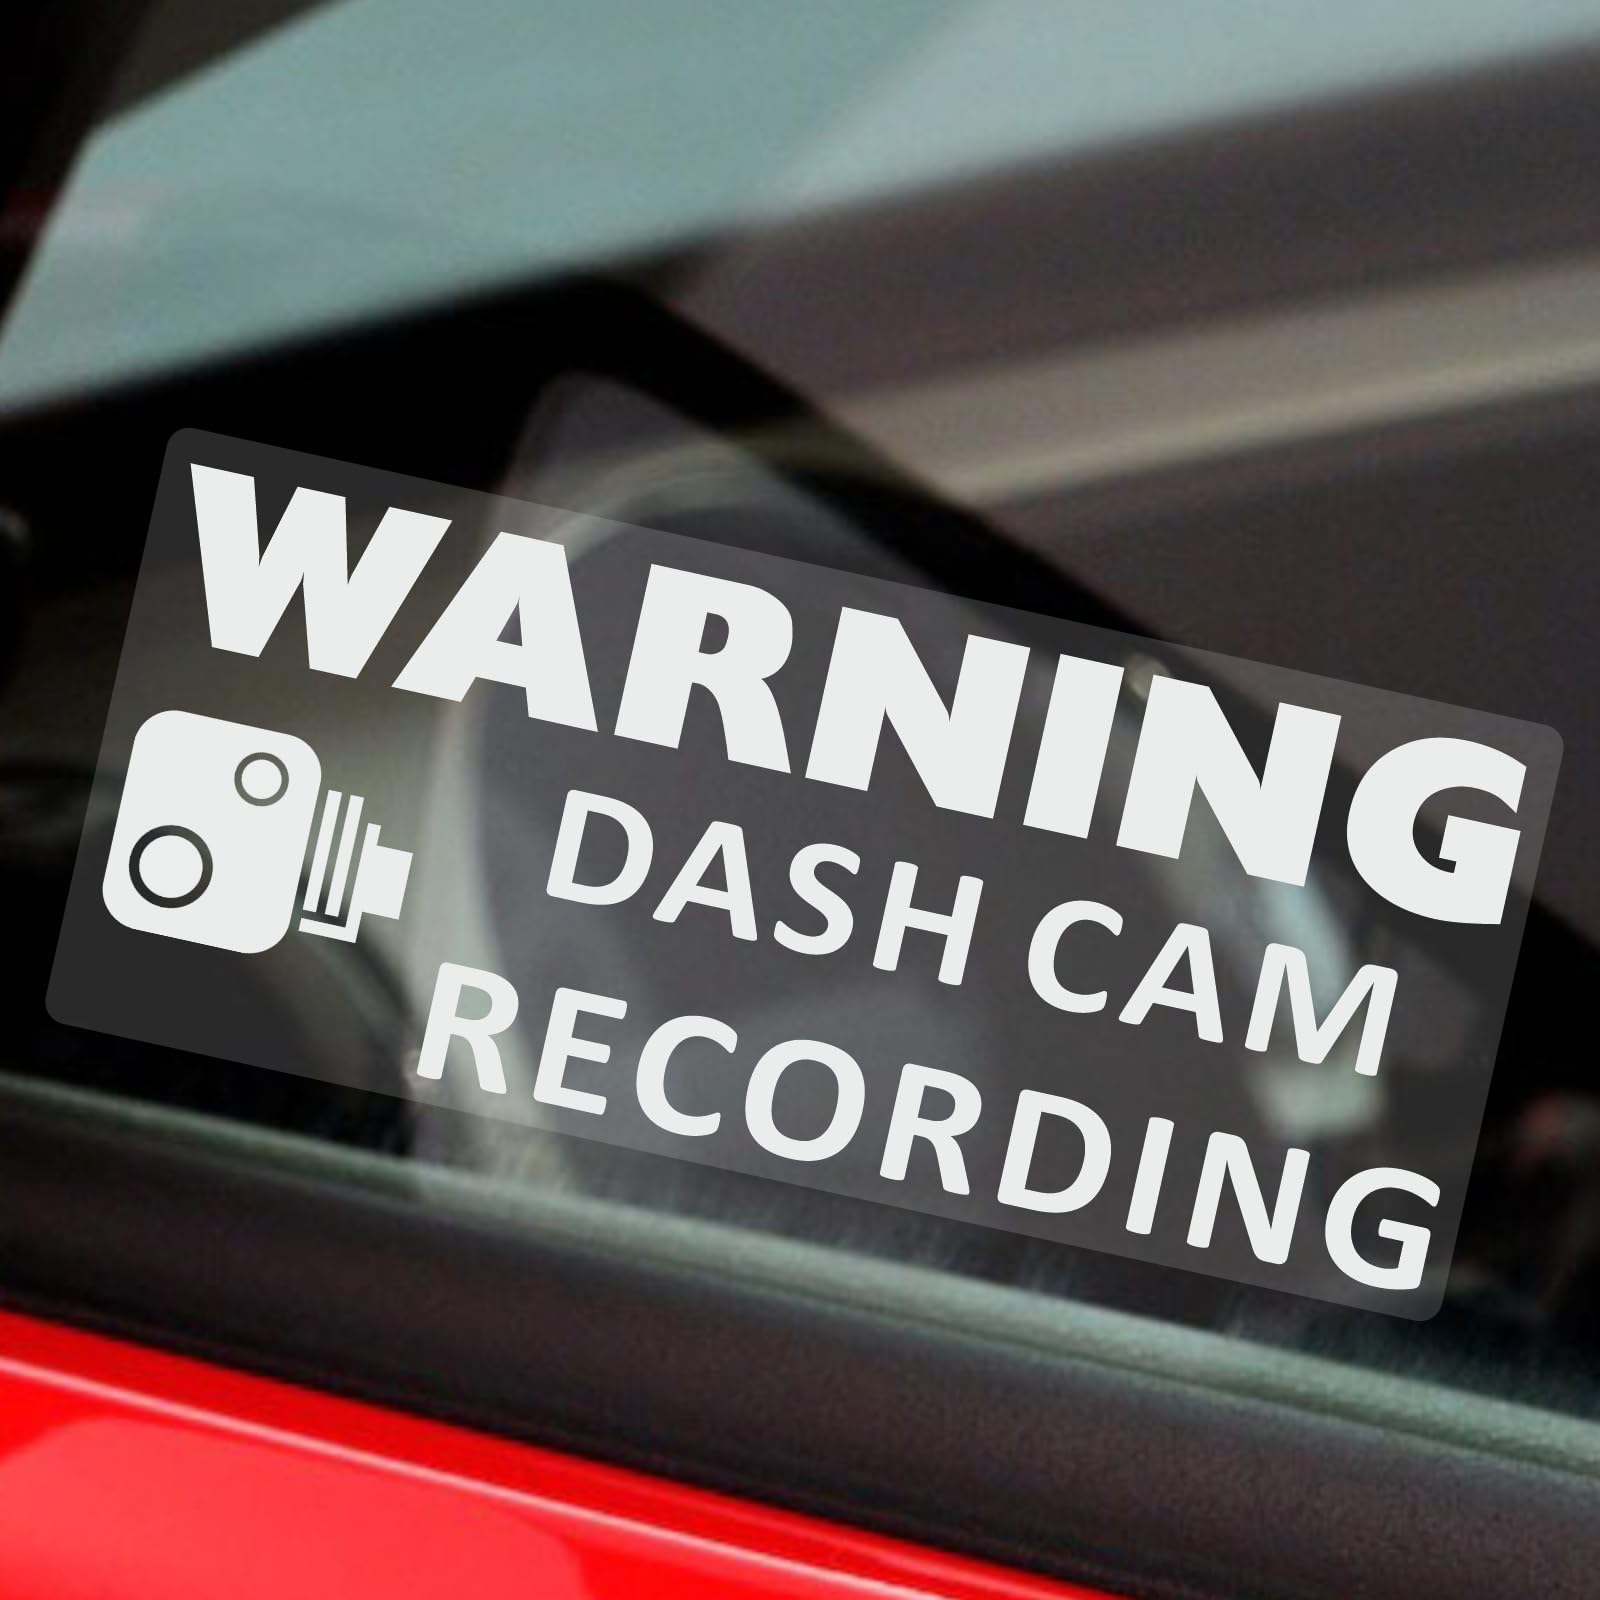 1 x Erwärmung Dash Cam recording- 200 mm – Fenster stickers-vehicle Sicherheit Dash Cam signs-cctv, Auto, Van, Truck, Taxi, Mini, CAB, Bus, Coach, Go Pro von Platinum Place